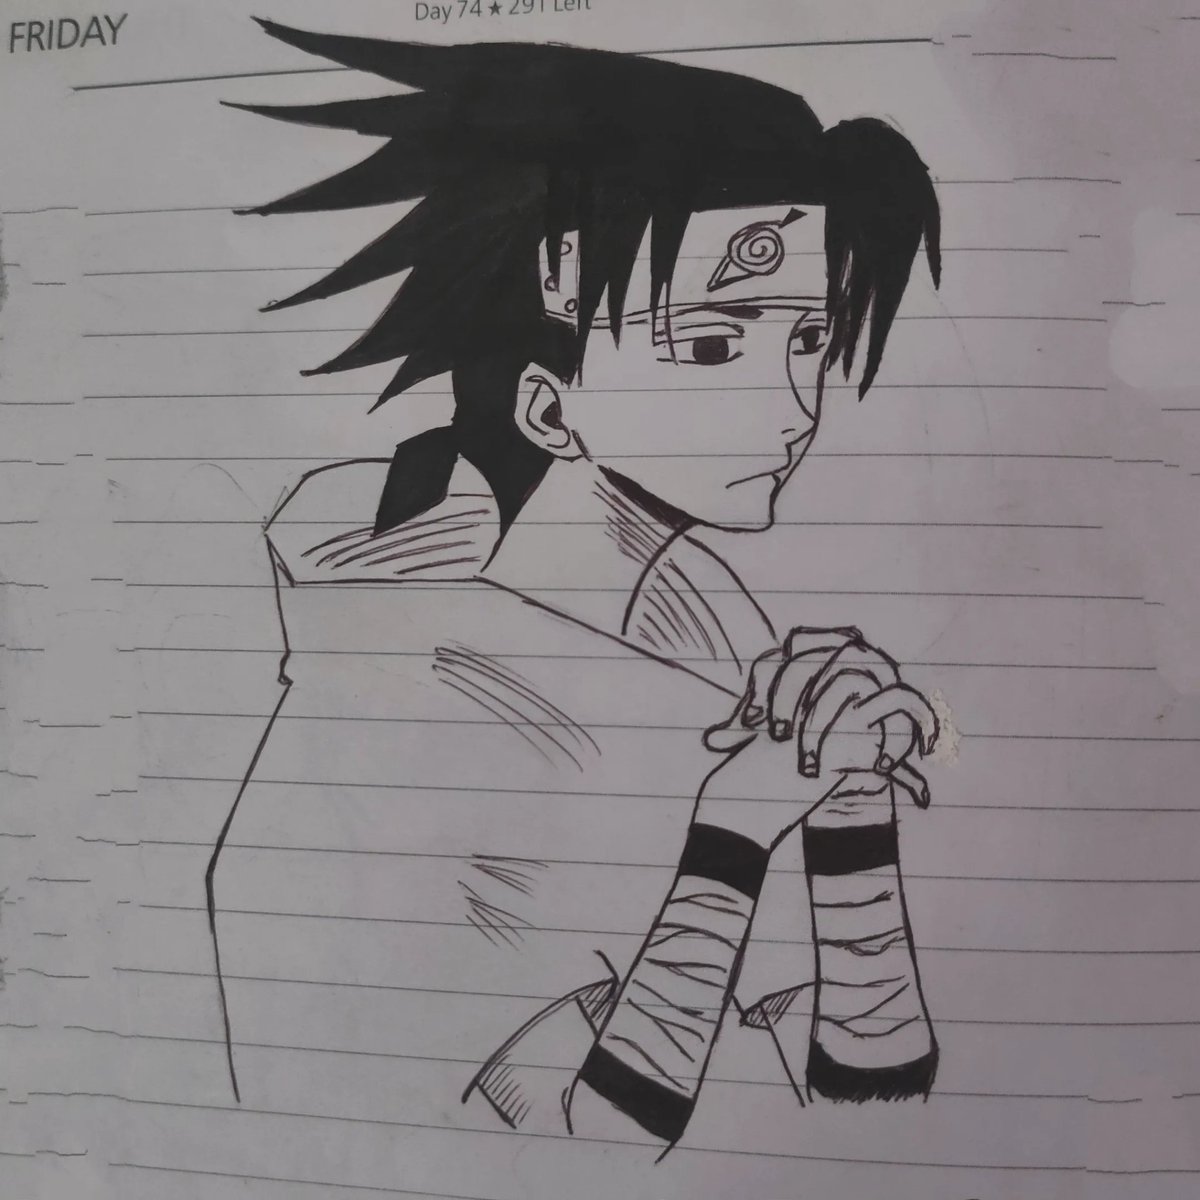 The Infamous Pose Of Uchiha Sasuke

Anime - Naruto
Character - Uchiha Sasuke
#naruto #uchihasasuke #animefanart